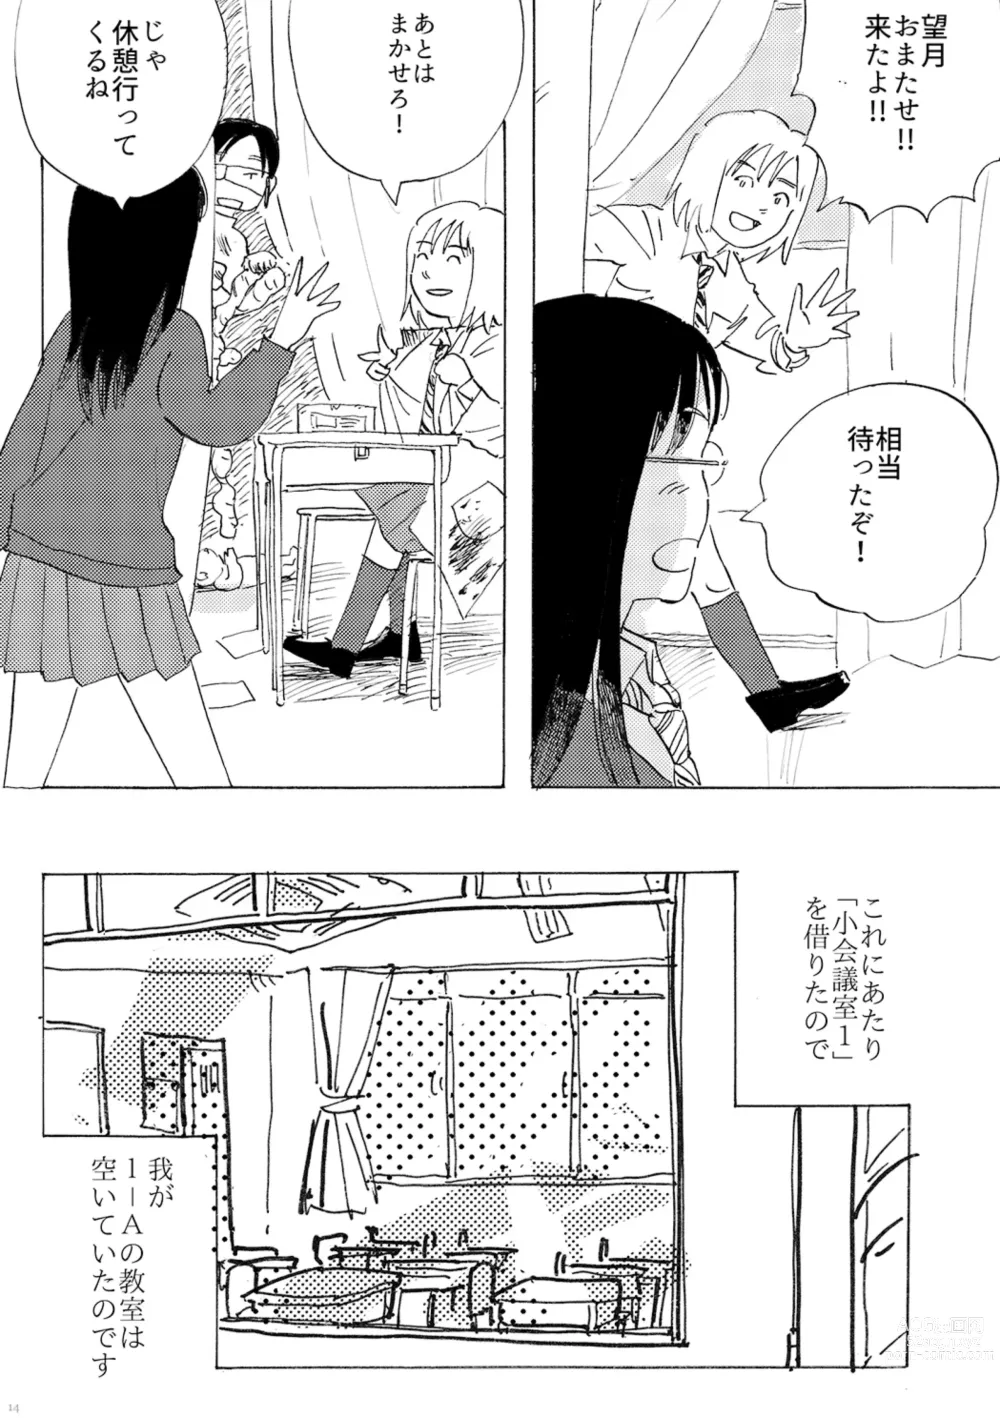 Page 14 of manga AVALON 11-gou